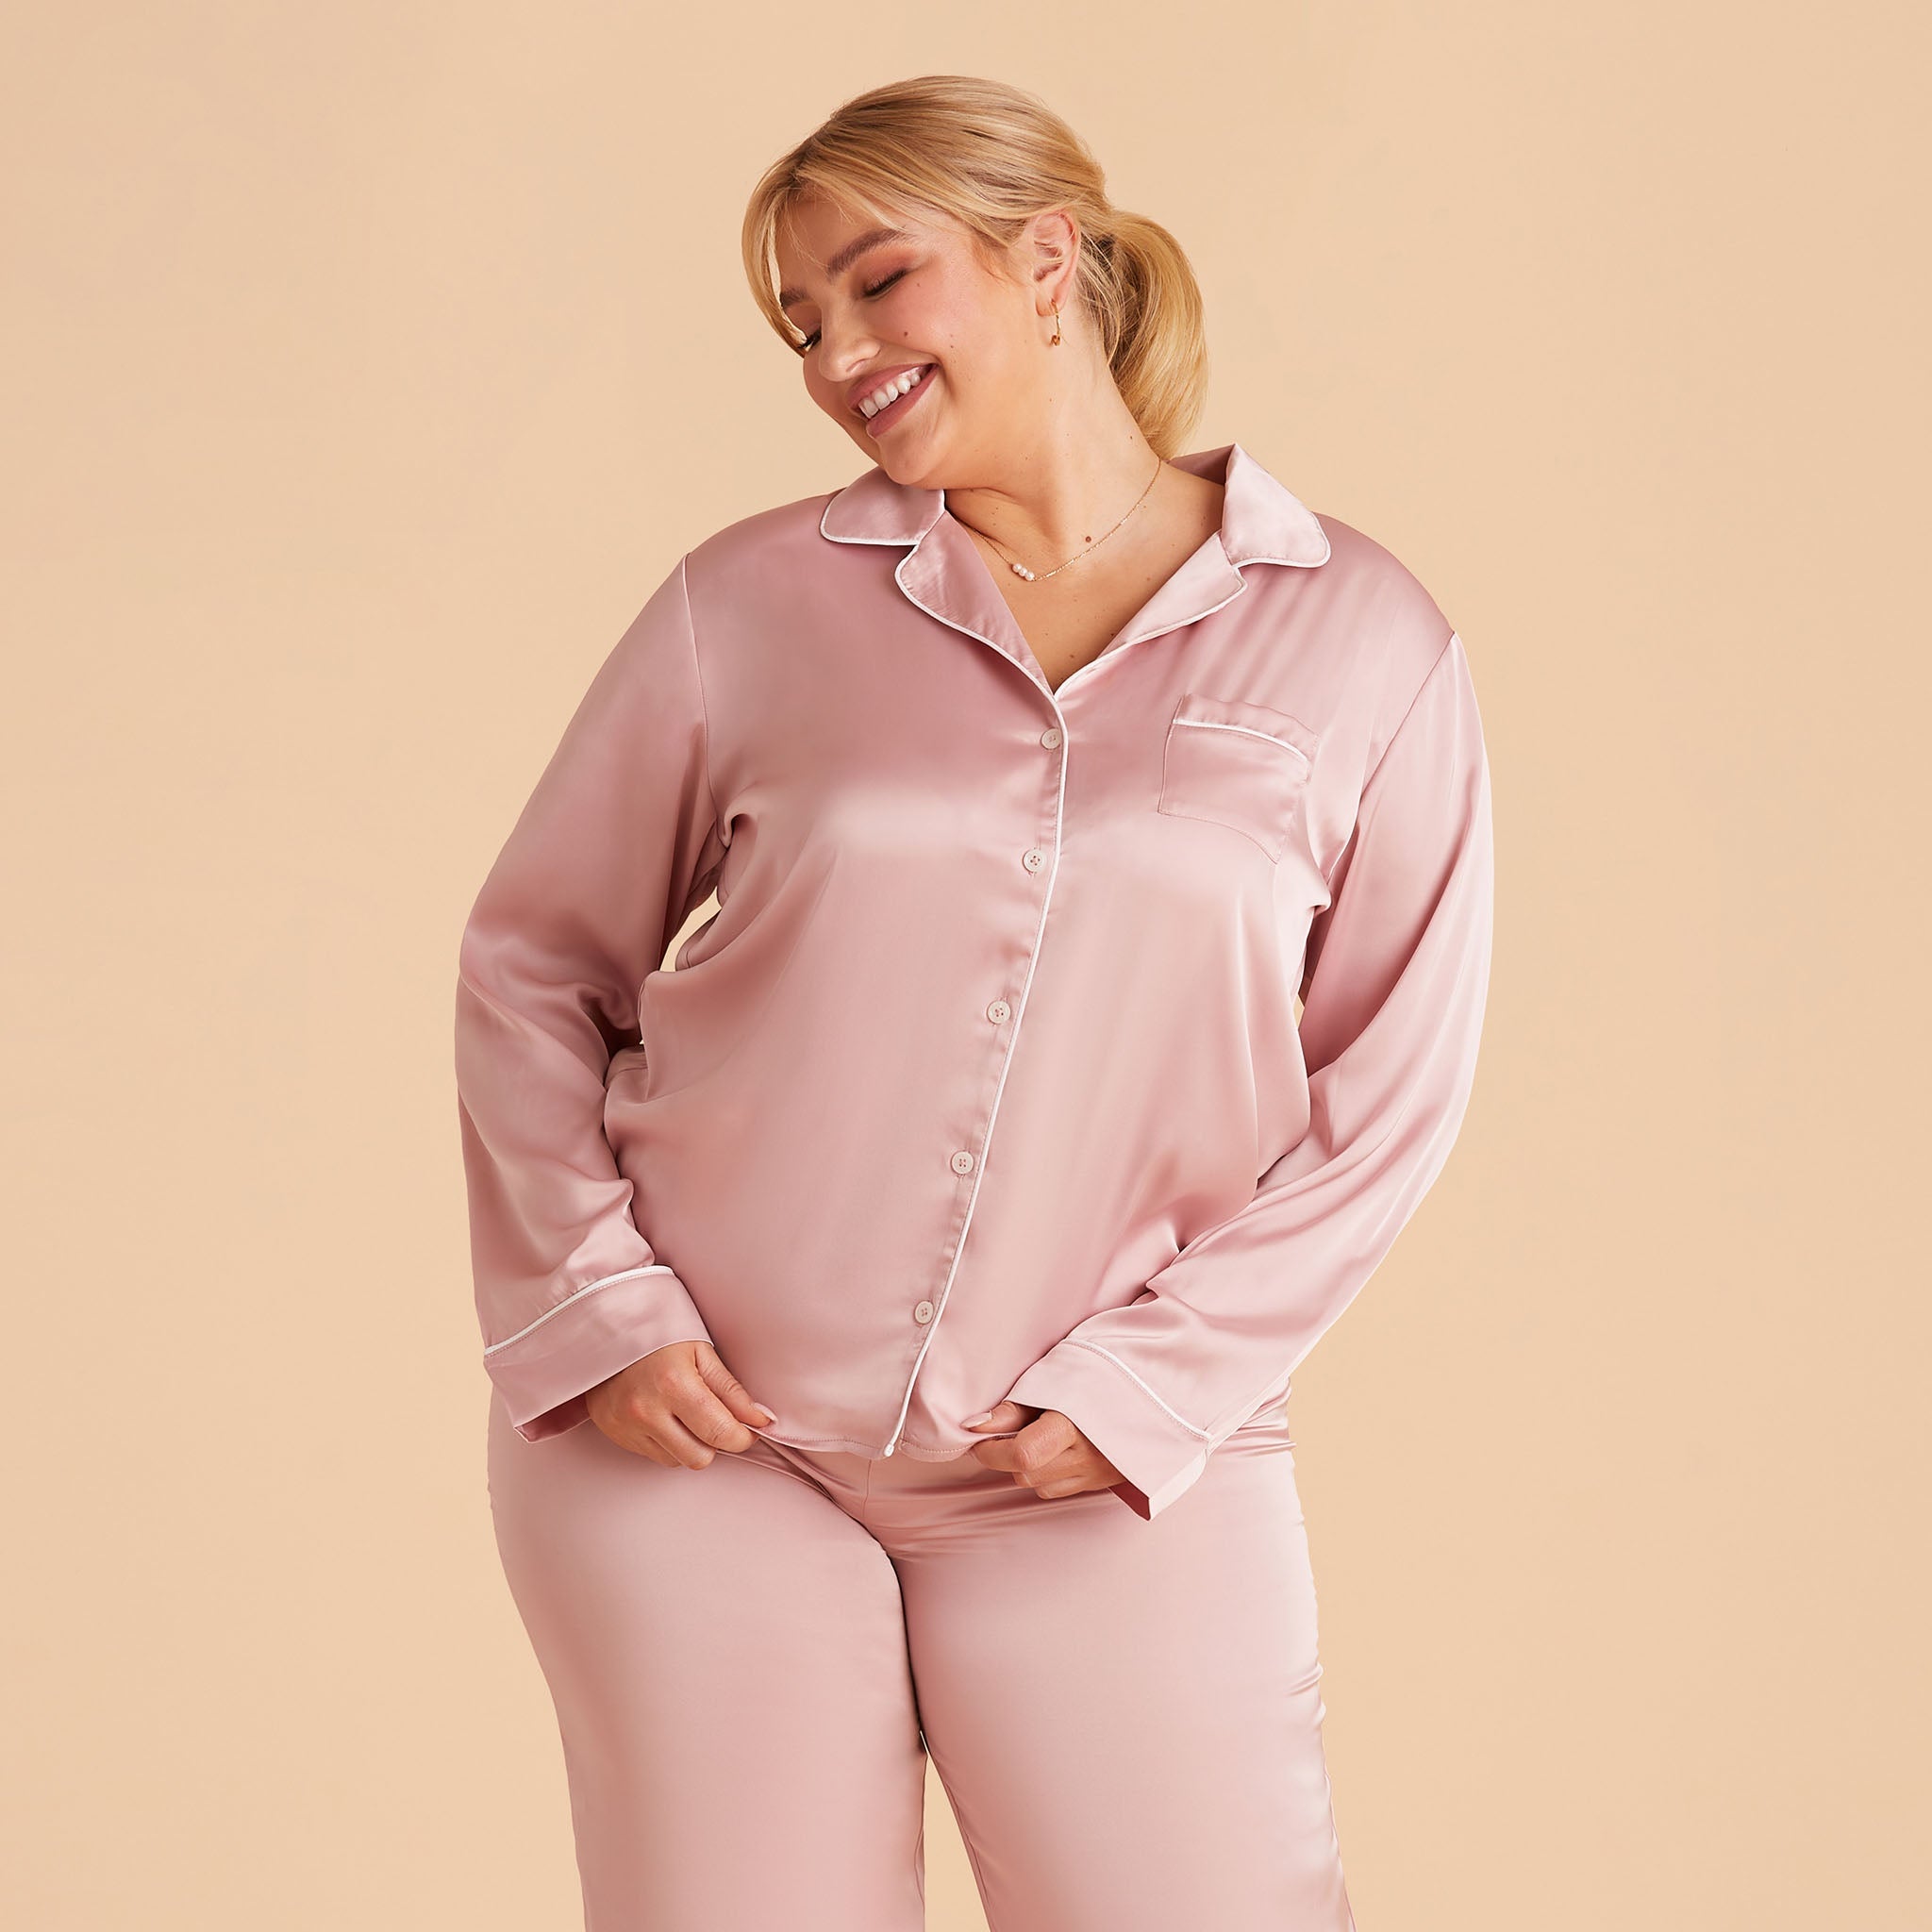 Buy Women's Inspire Seamless Long-Sleeve Top, Pink